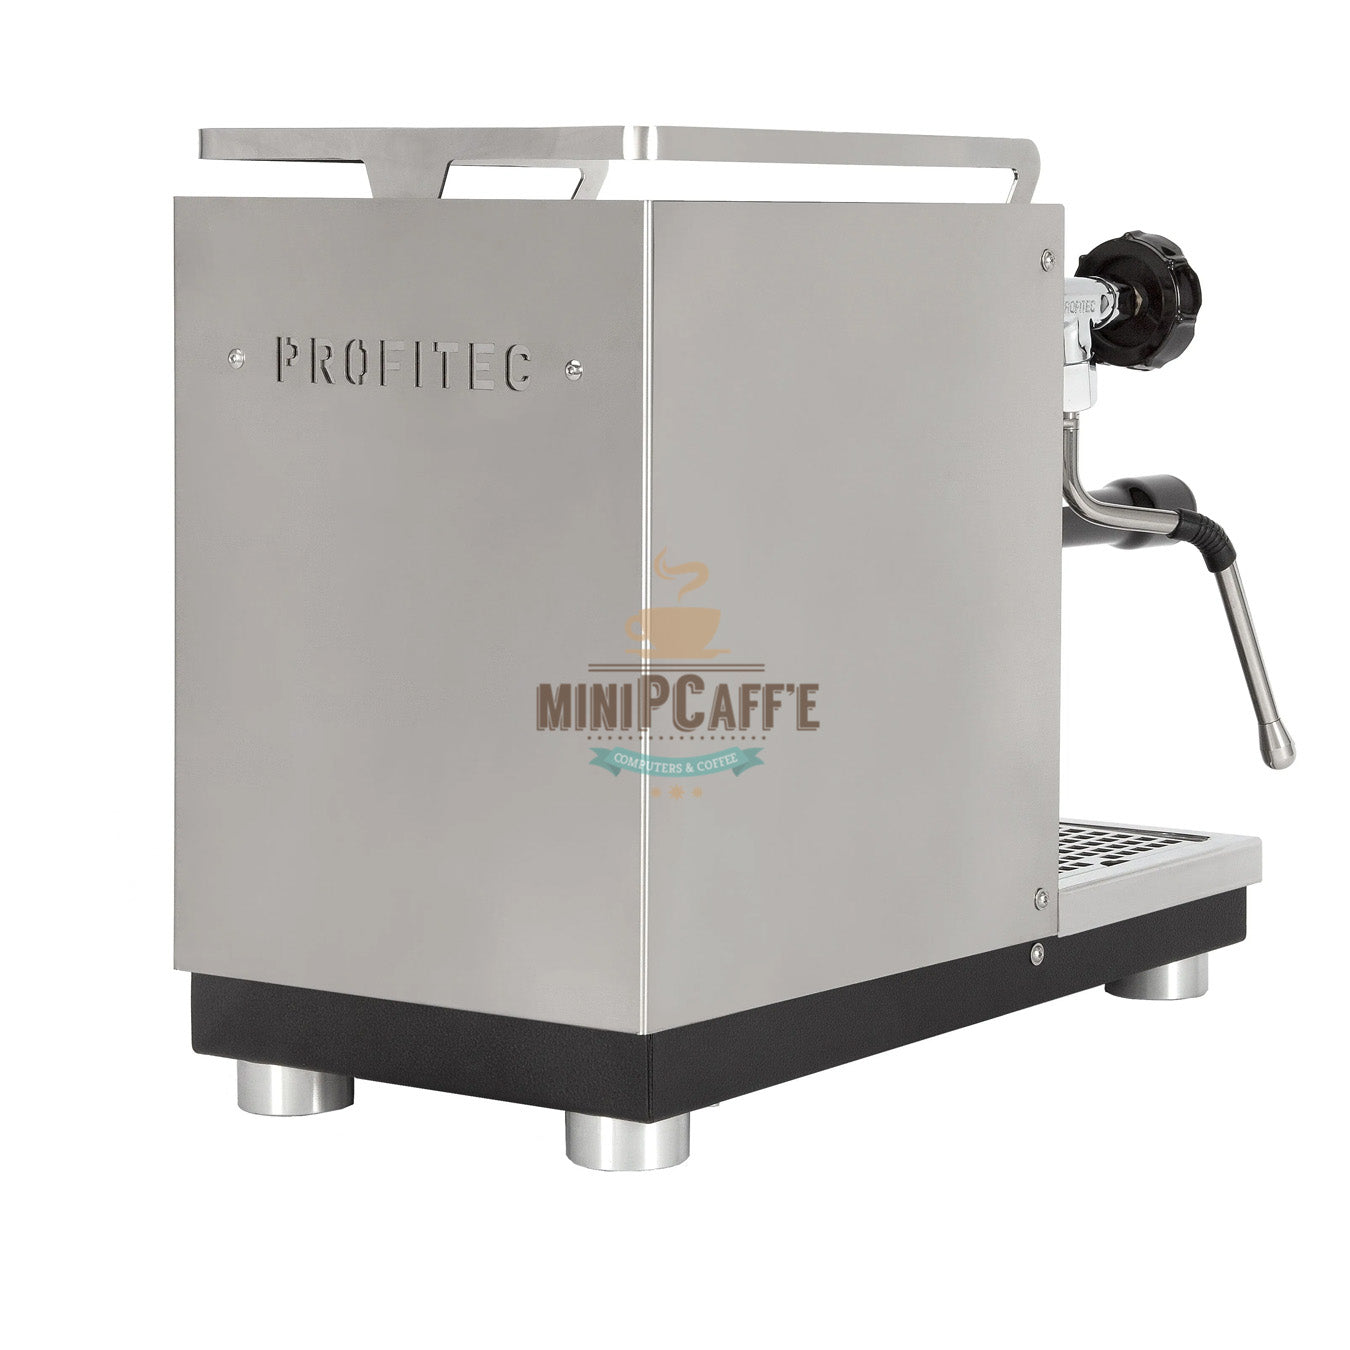 Profitec Pro 400 Espresso Machine and Eureka Specialita Grinder